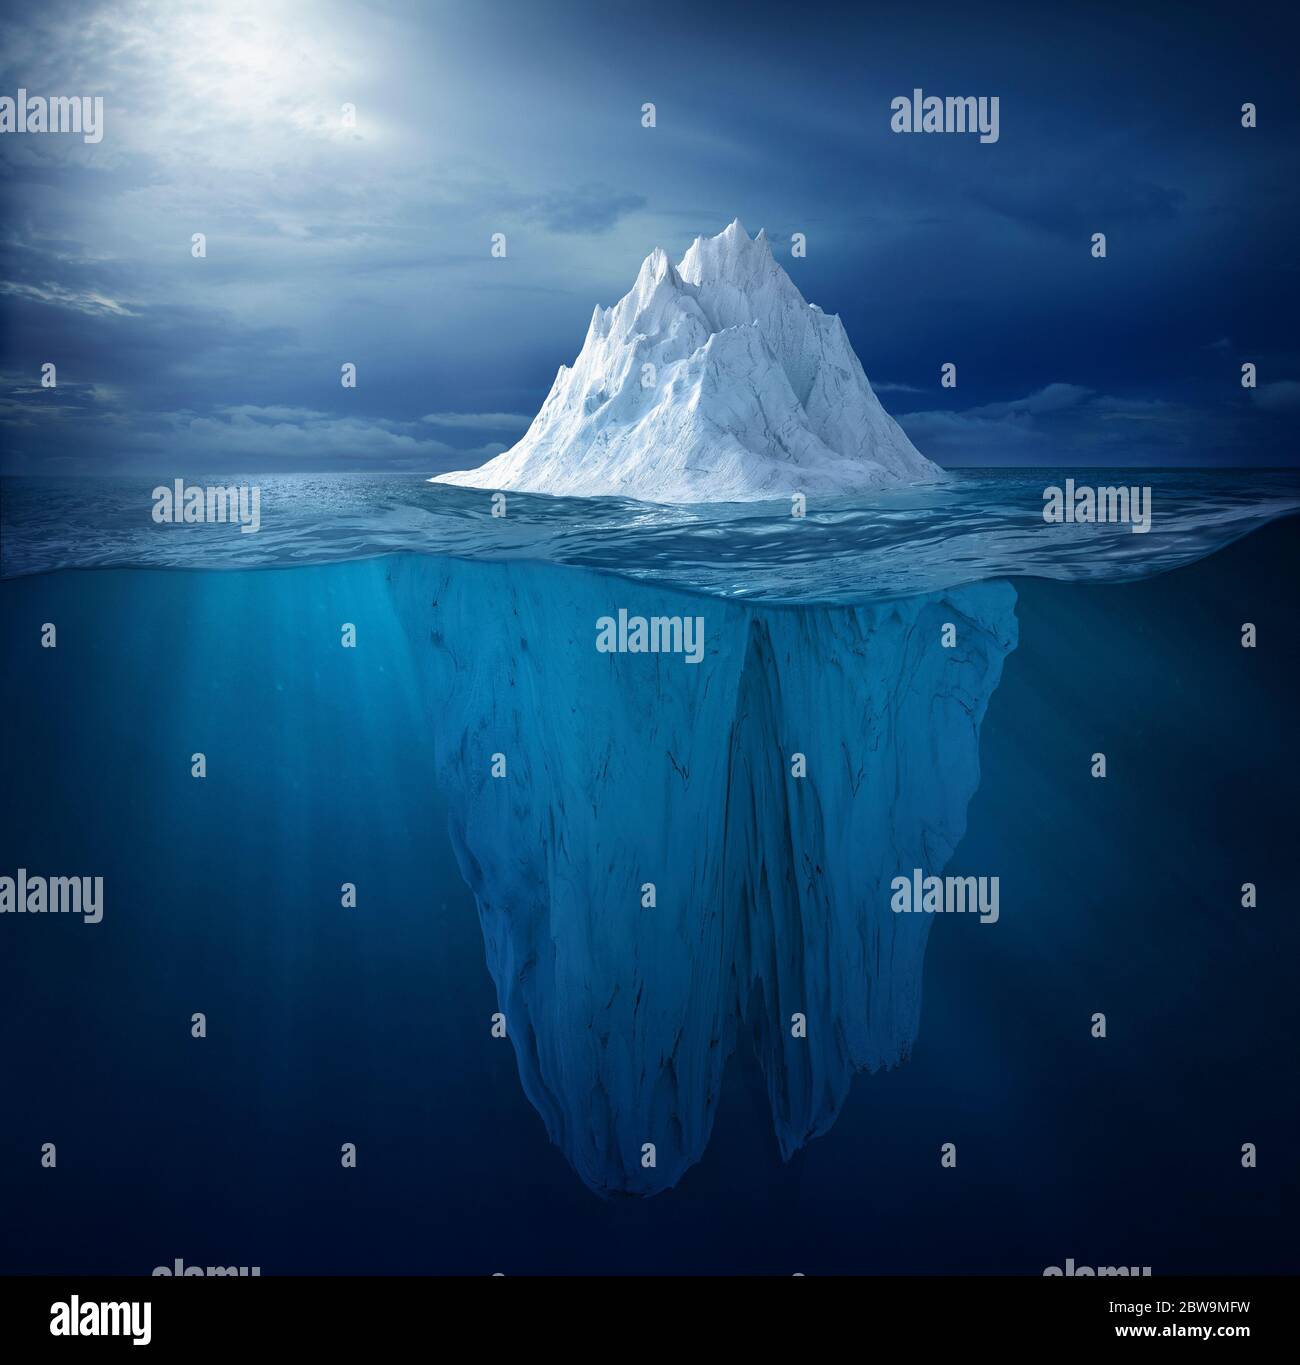 Iceberg in ocean Stock Photo